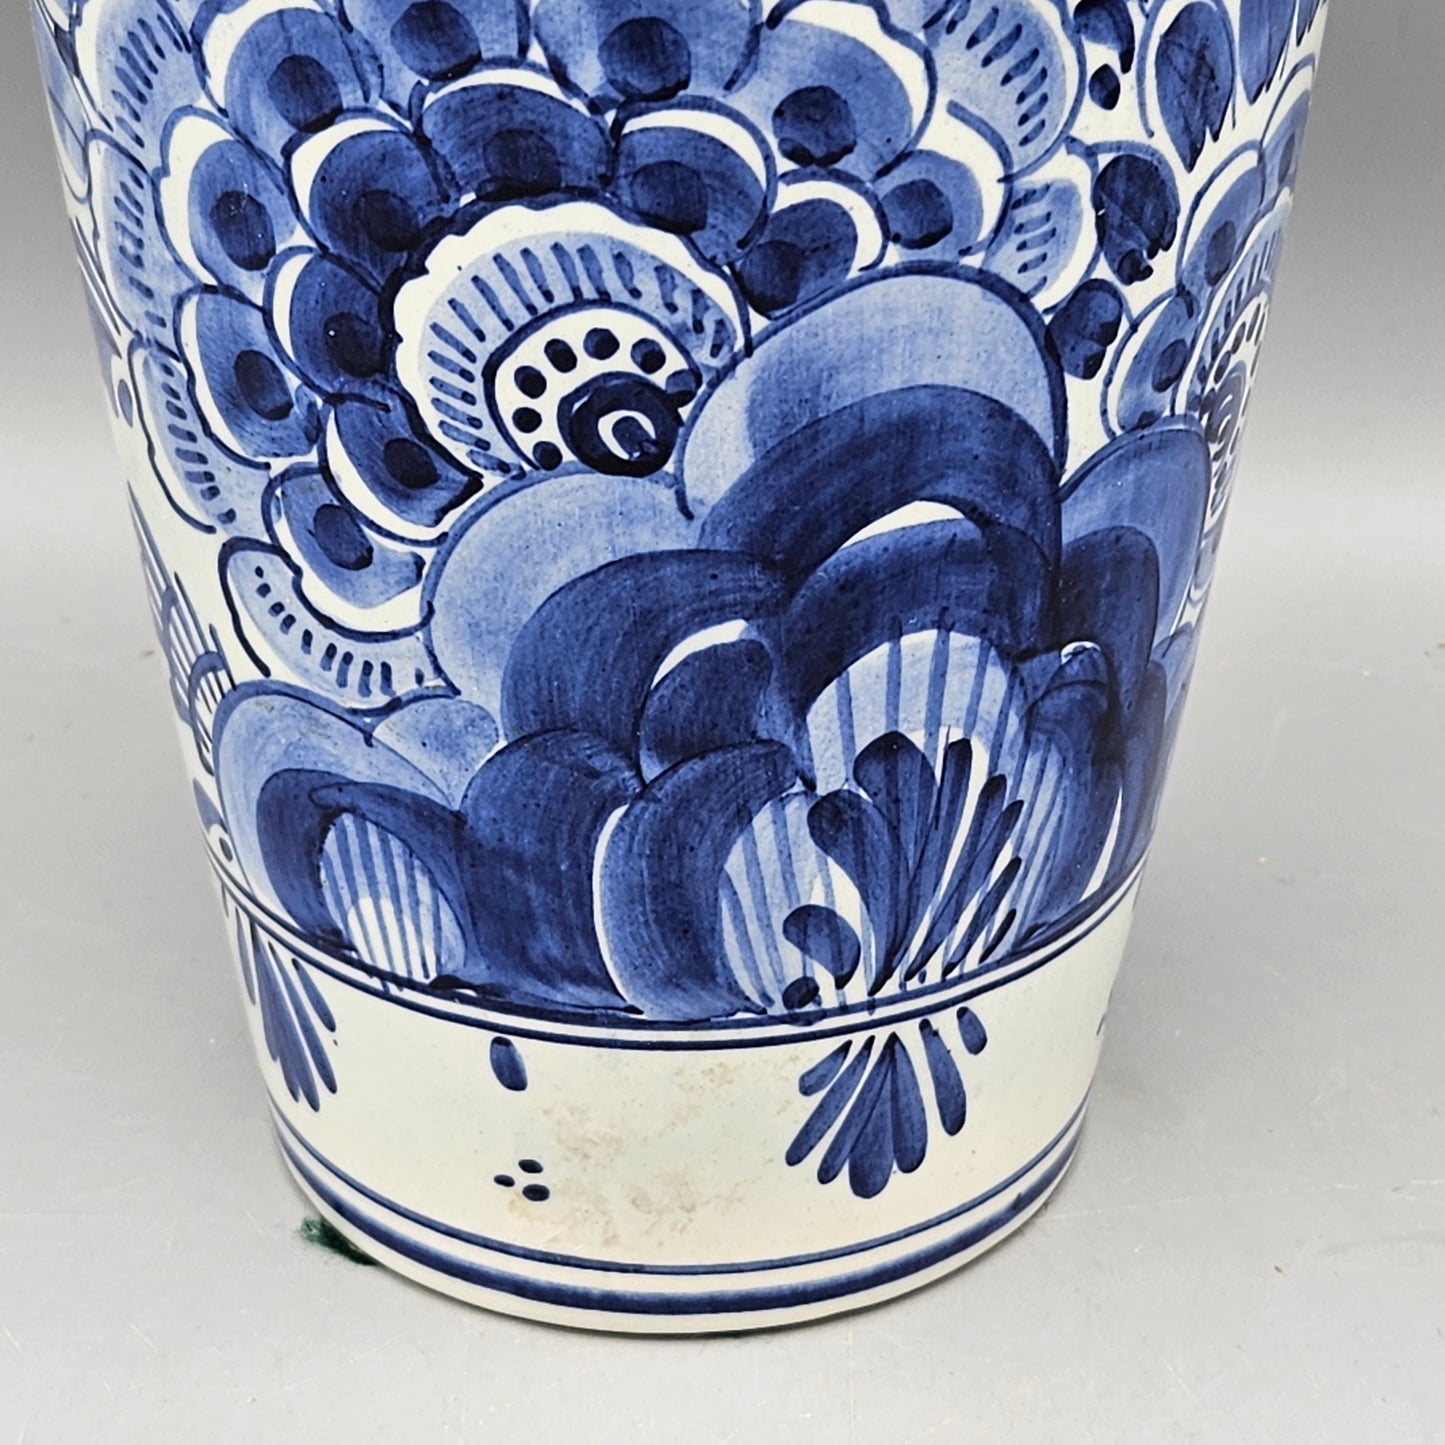 Blue and White Delft Pottery Vase